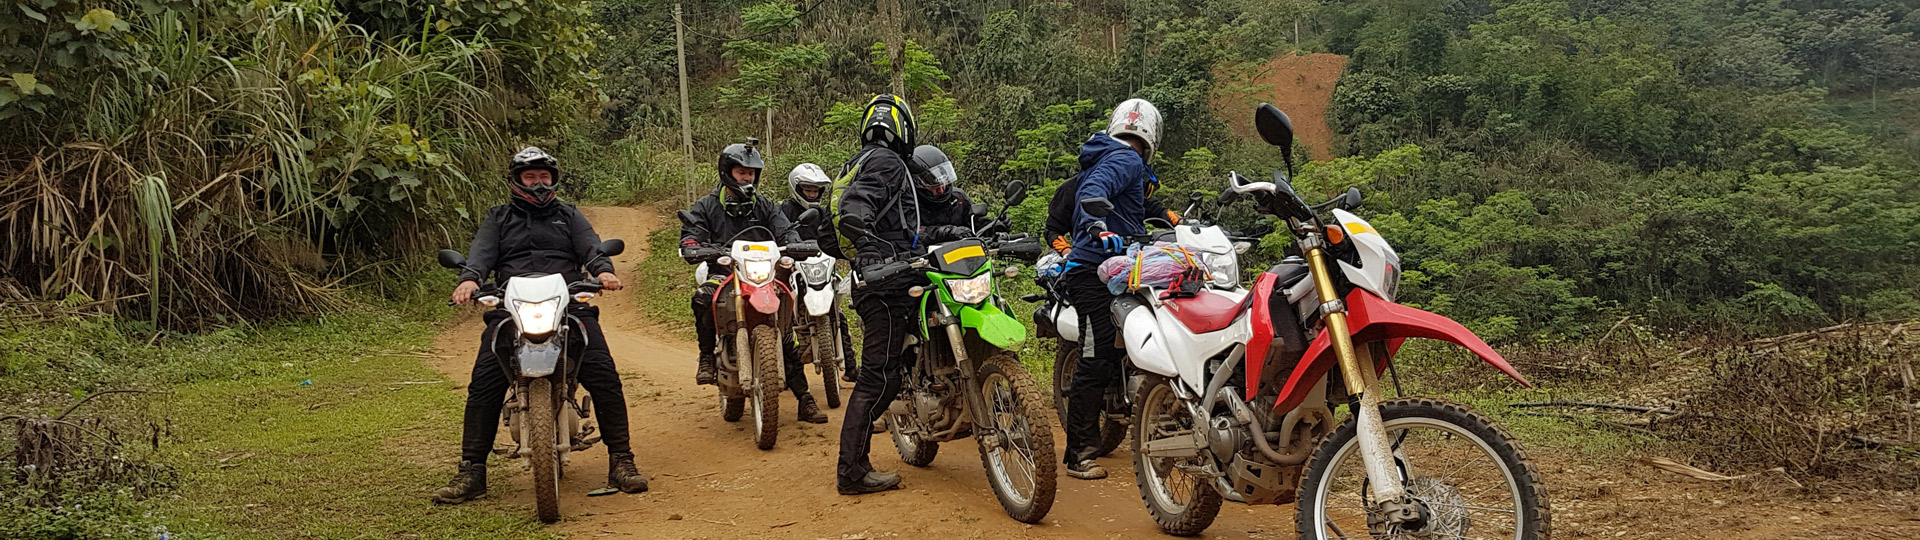 Myanmar Motorcycle Tours 4